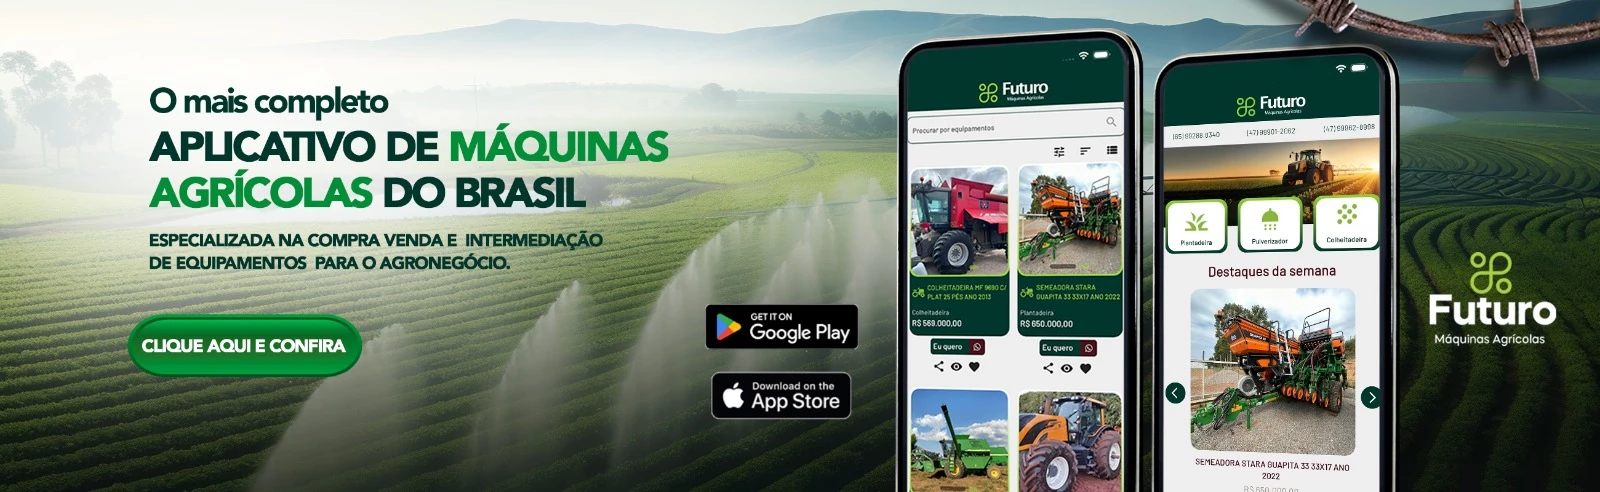 Aplicativo da Futuro Máquinas Agrícolas: Facilitando a compra e venda de equipamentos